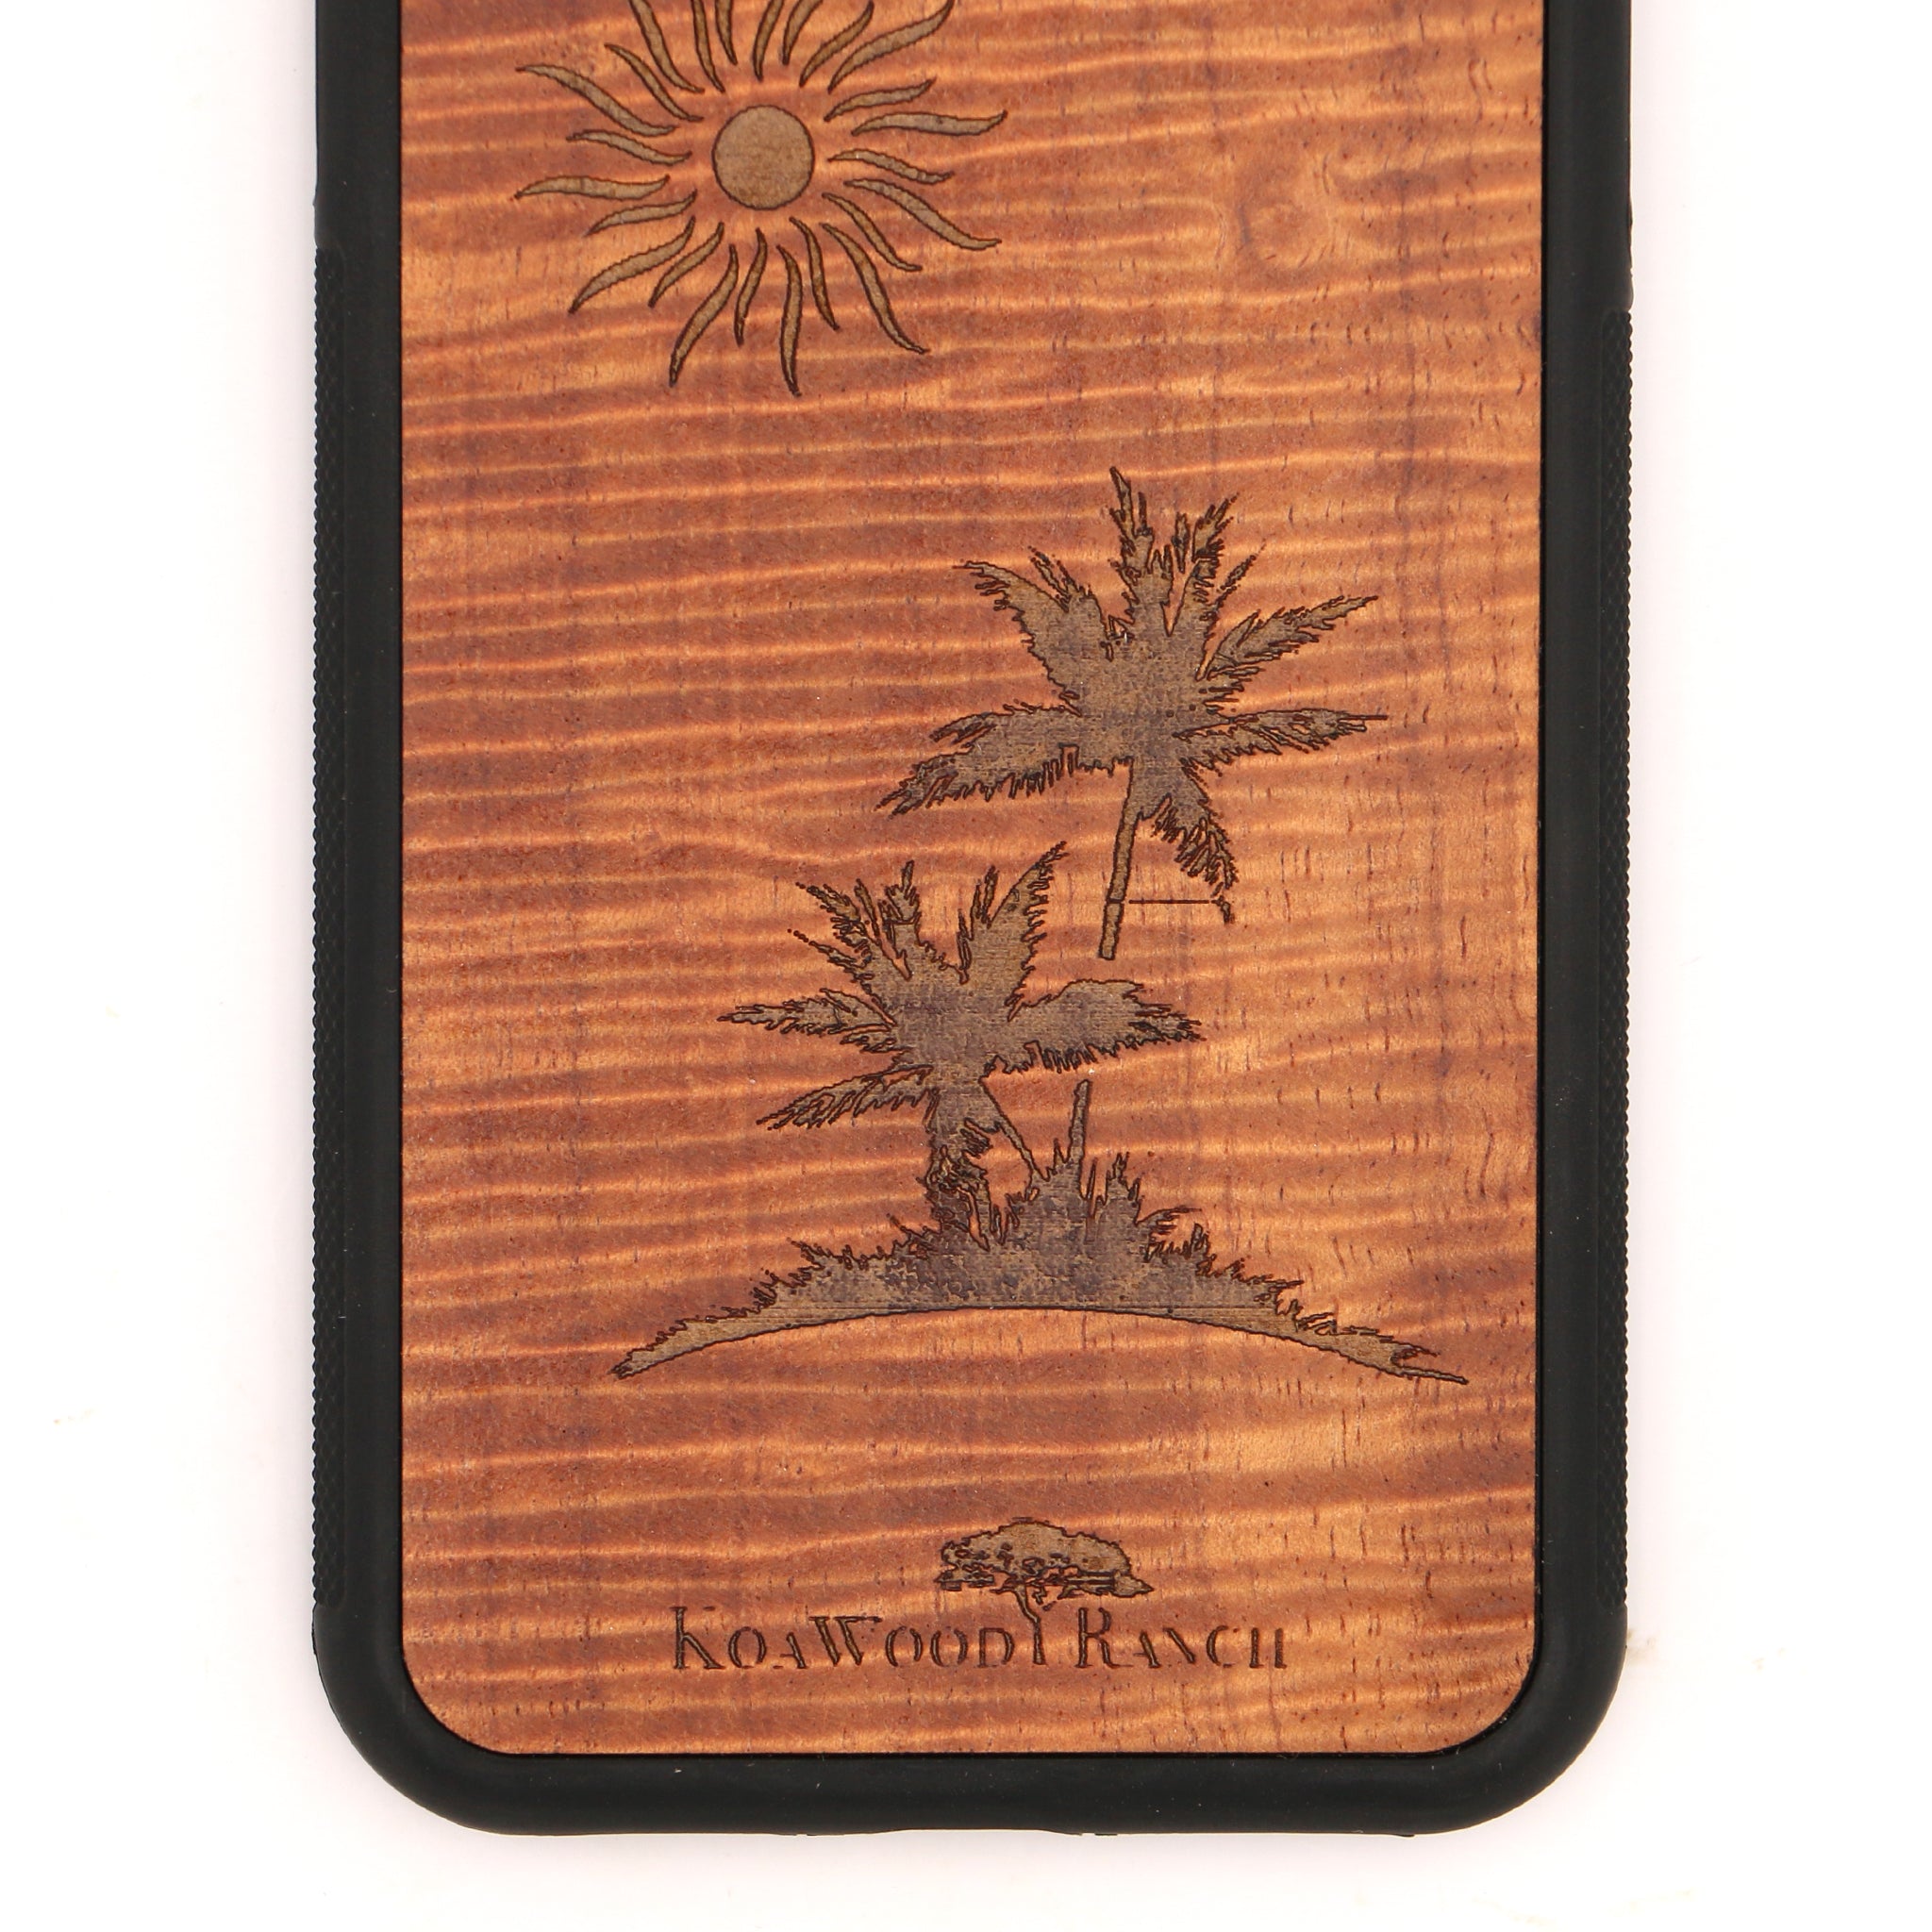 Koa Wood Phone Case - Palm Trees